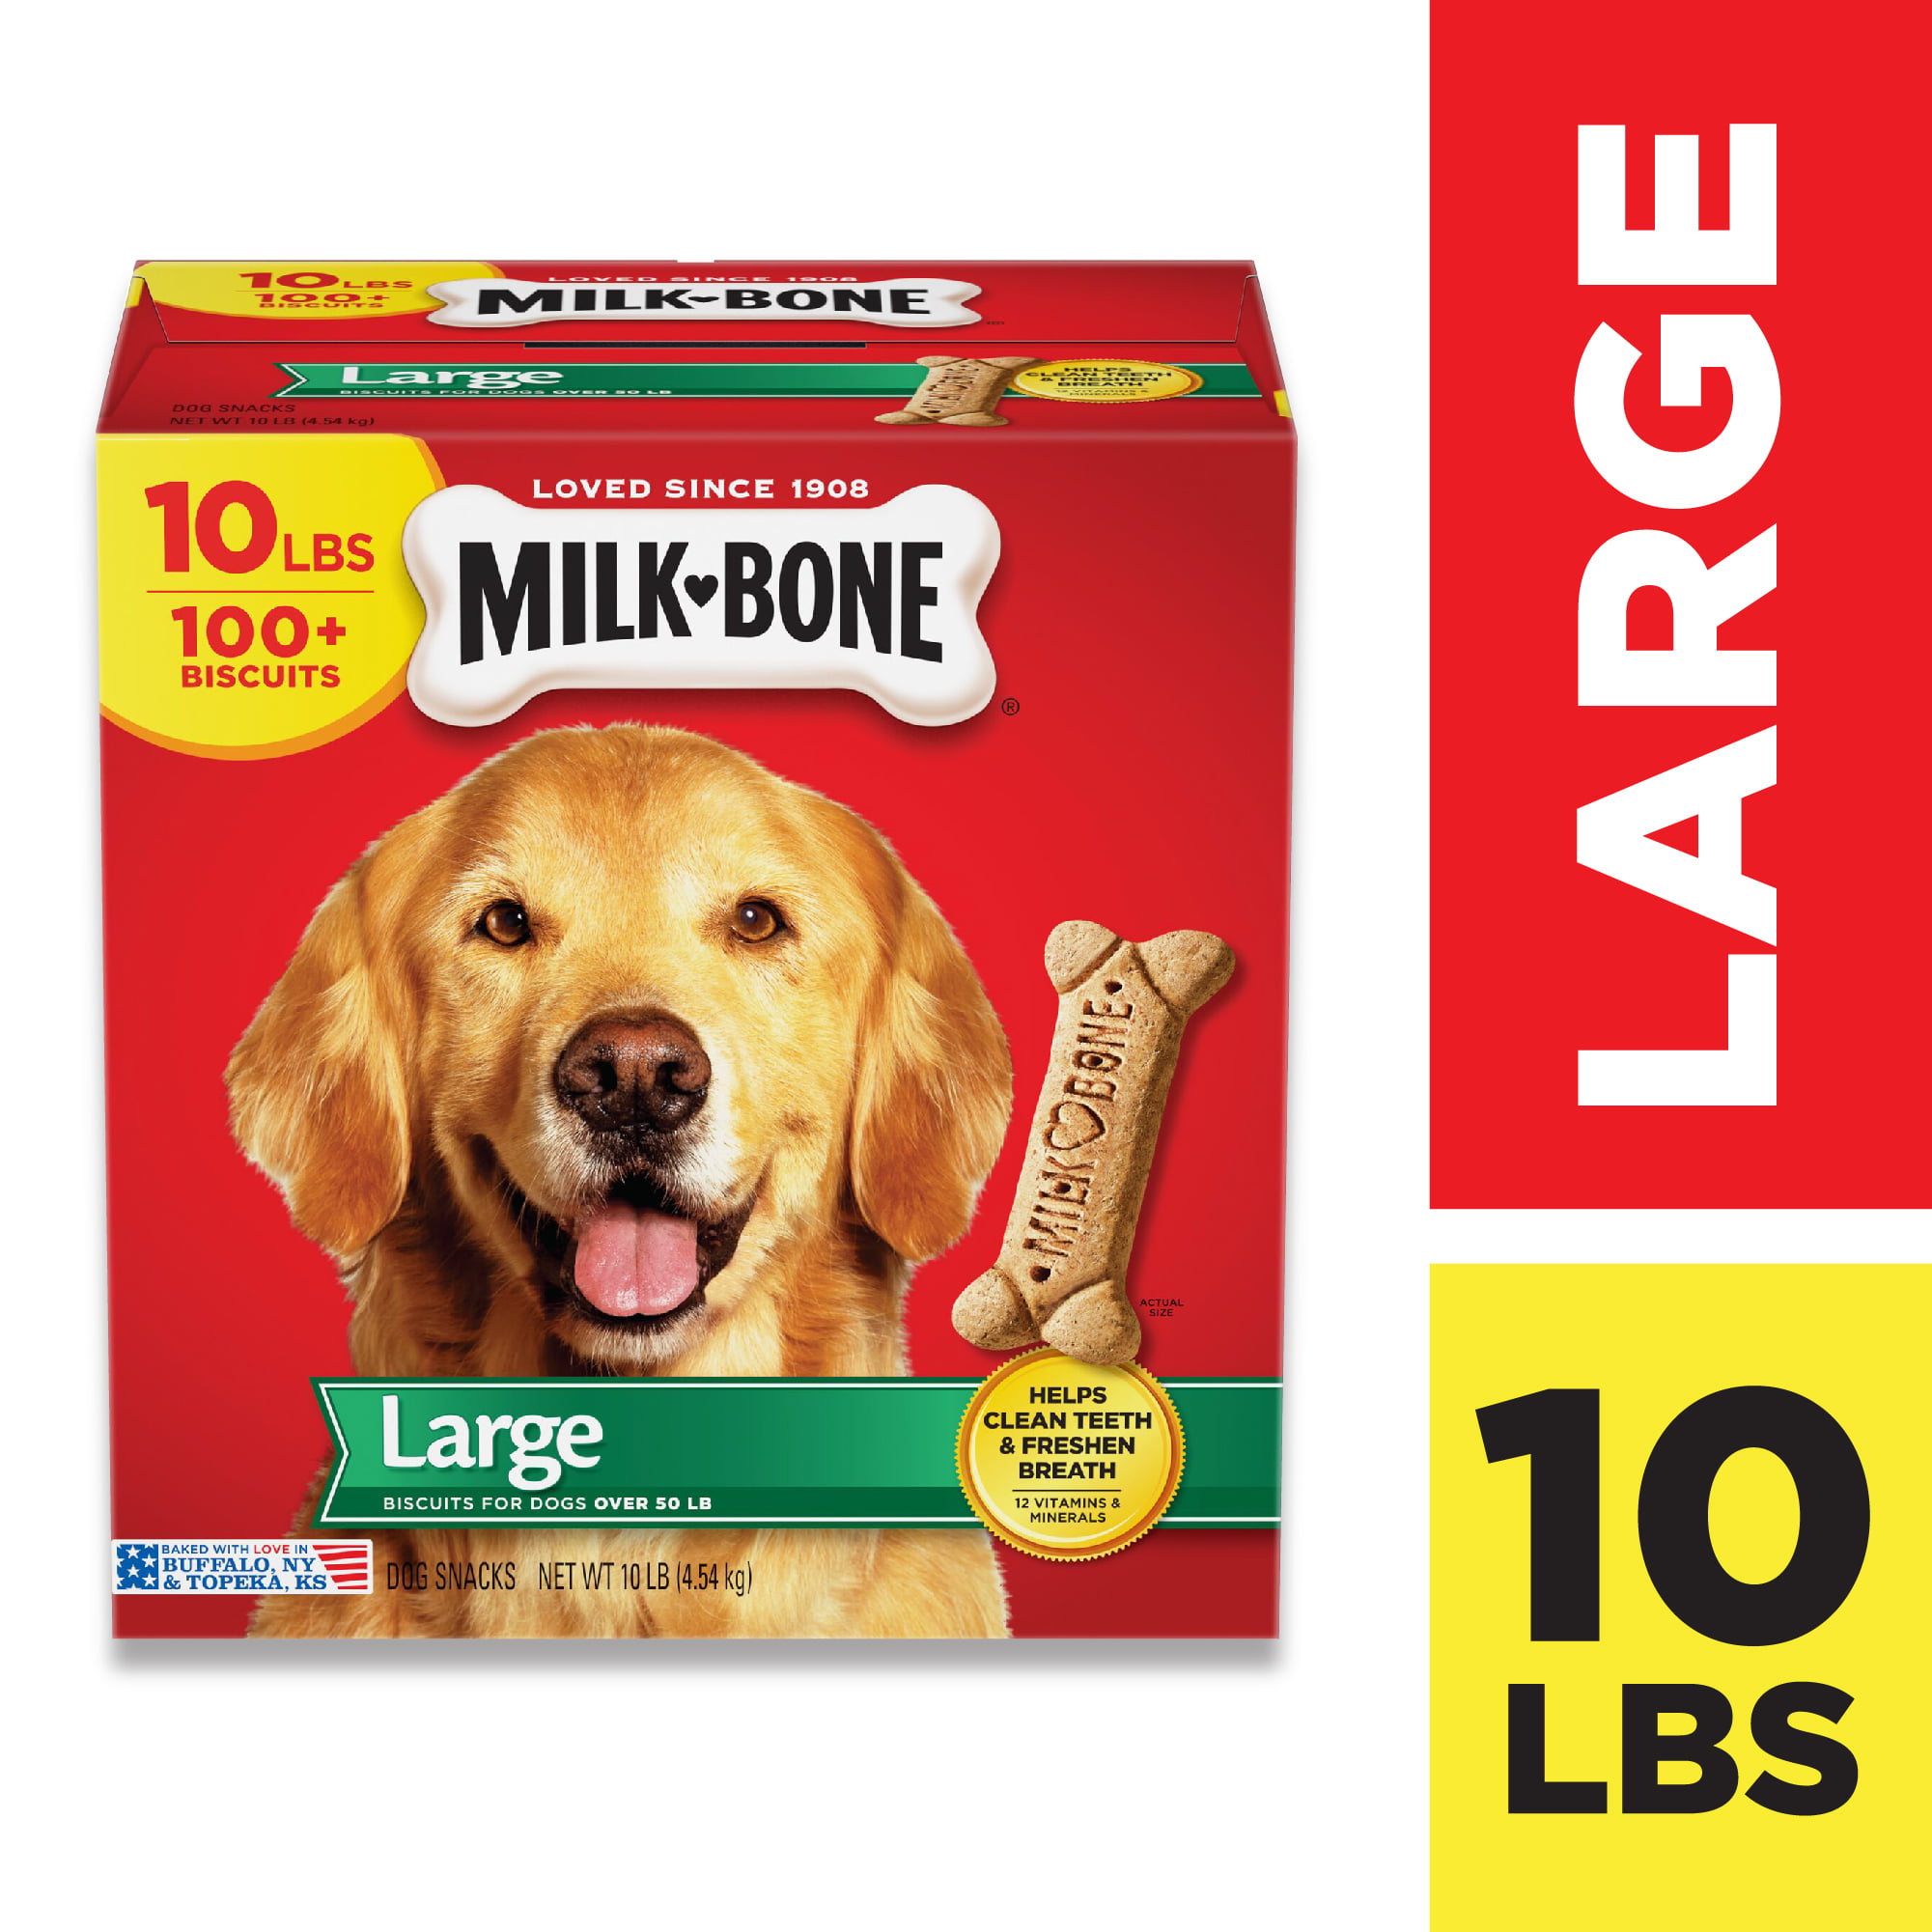 MilkBone Original Dog Treats for Large Dogs, 10 Pounds